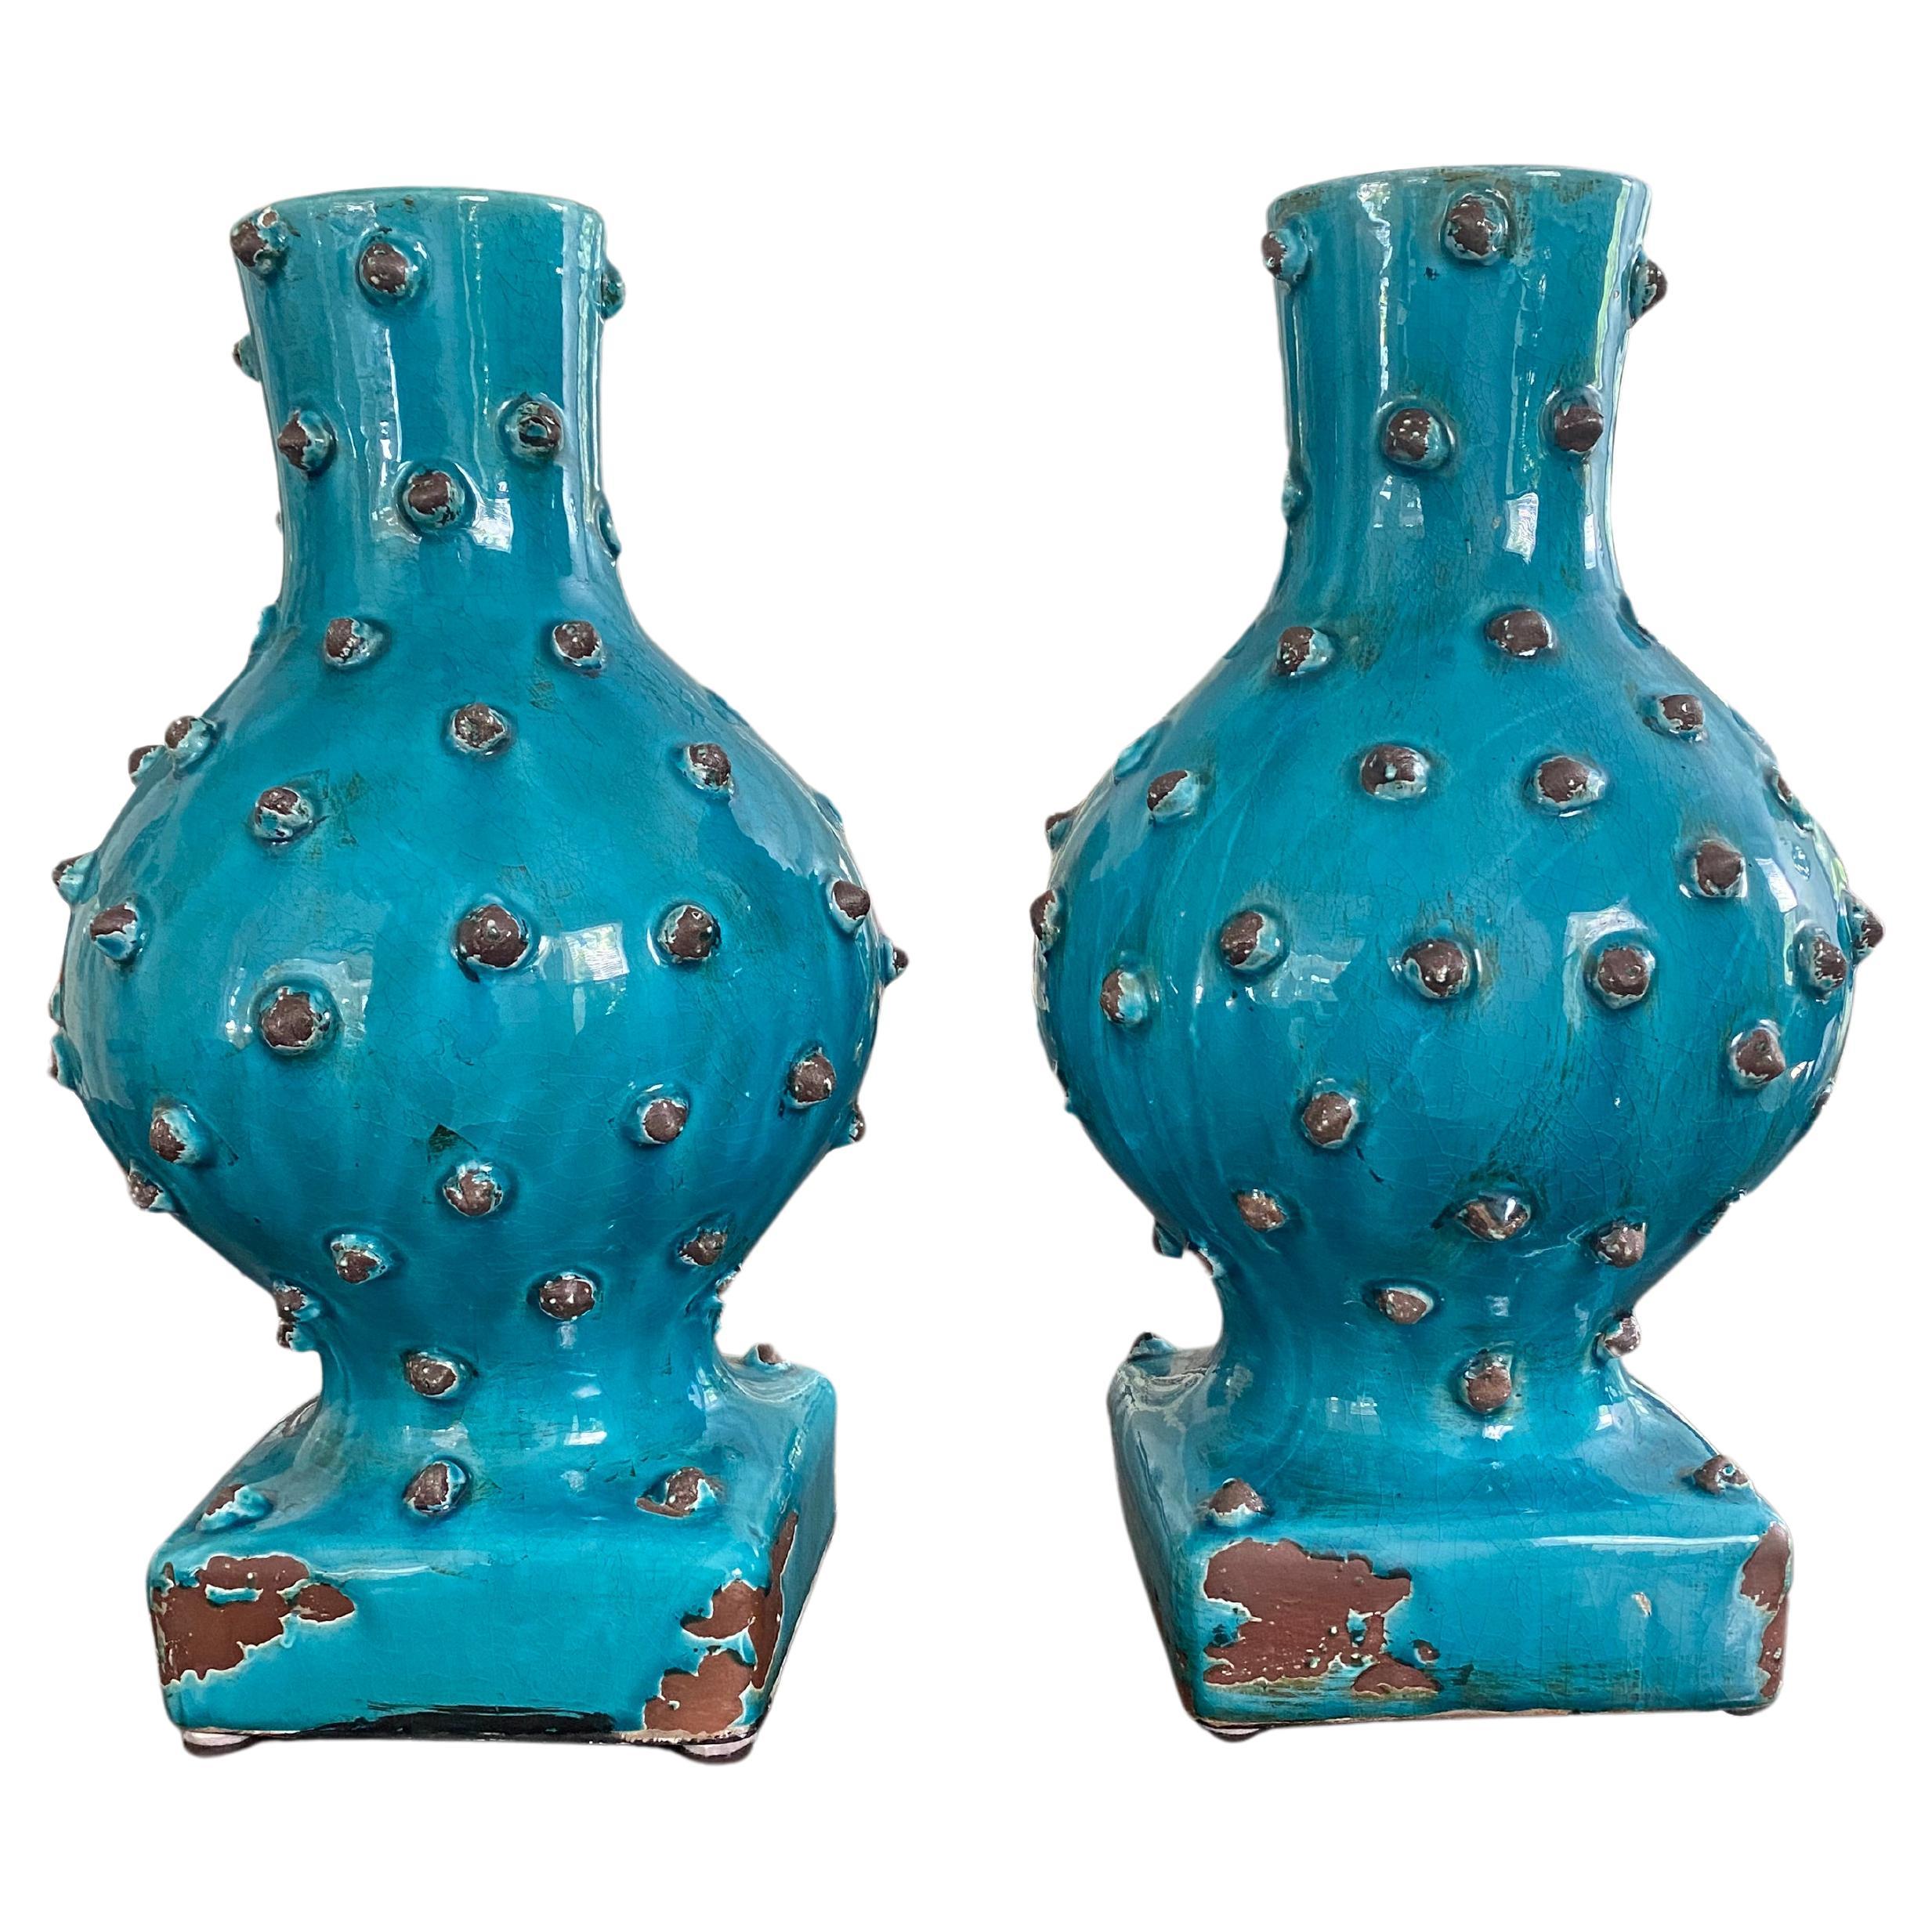 Pair of Brutalist vases Francois Bernard Paris designer France turquoise  For Sale